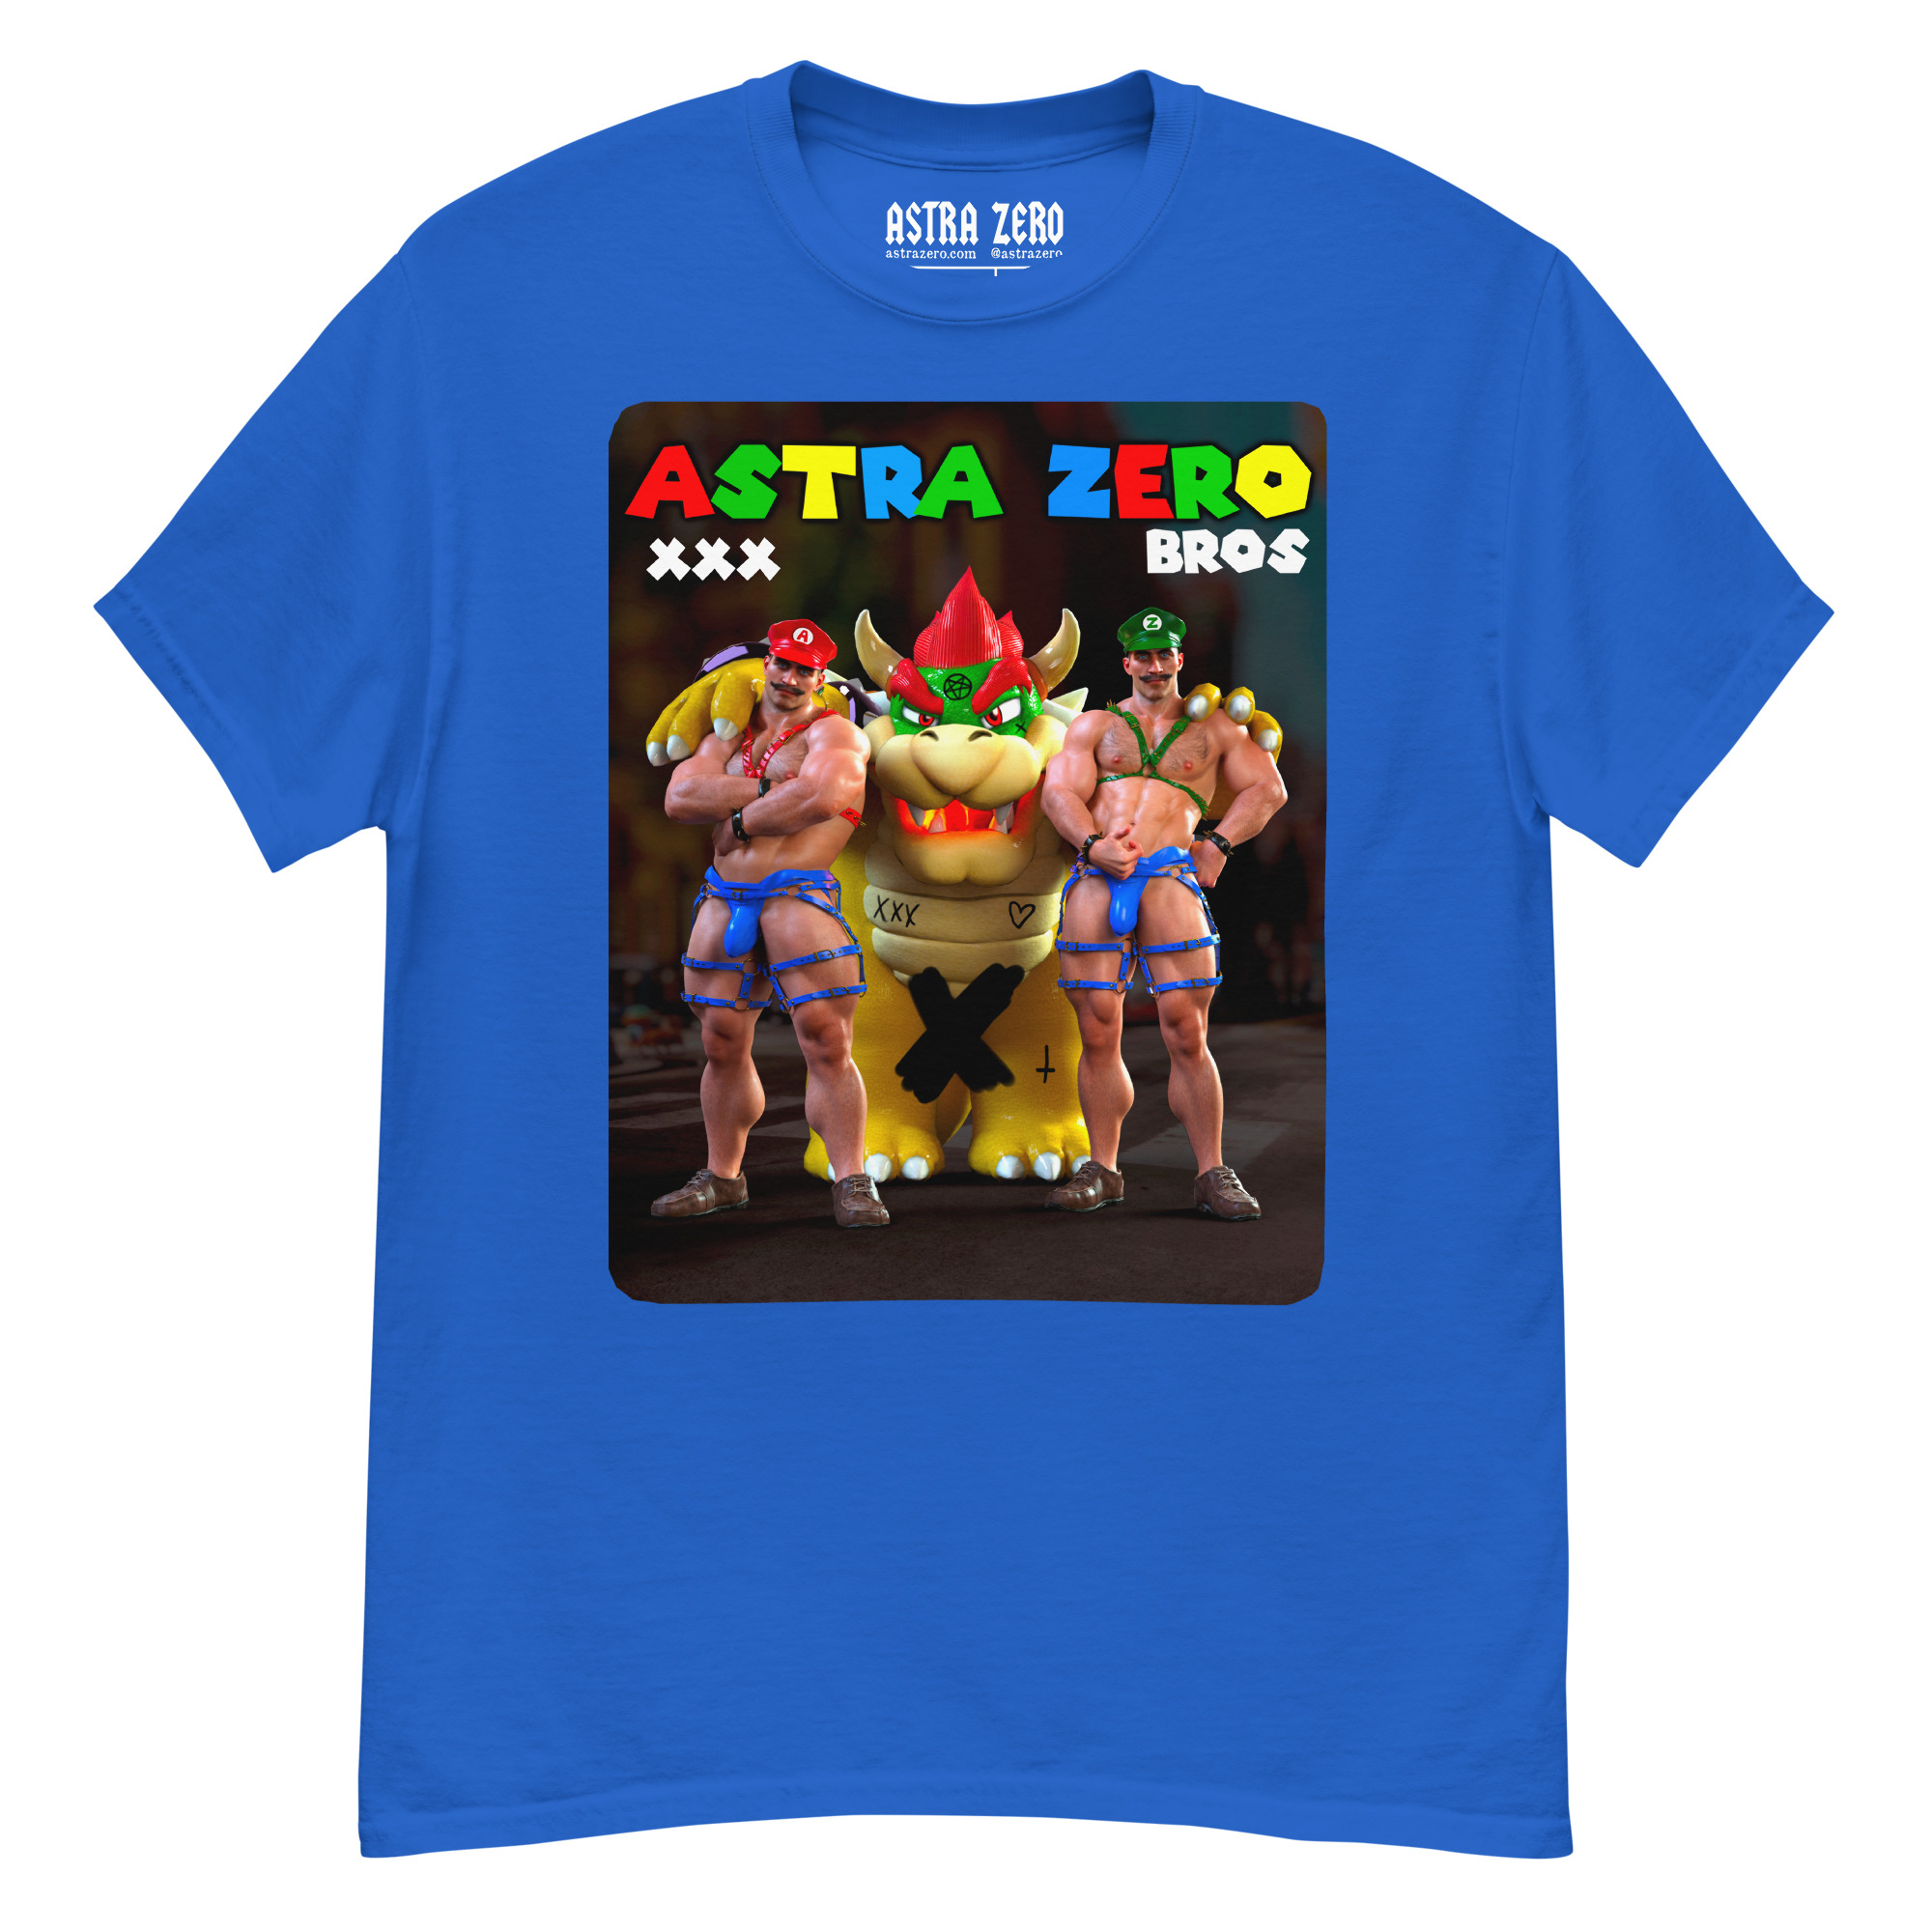 Featured image for “Astra Zero Bros - Men's classic tee”